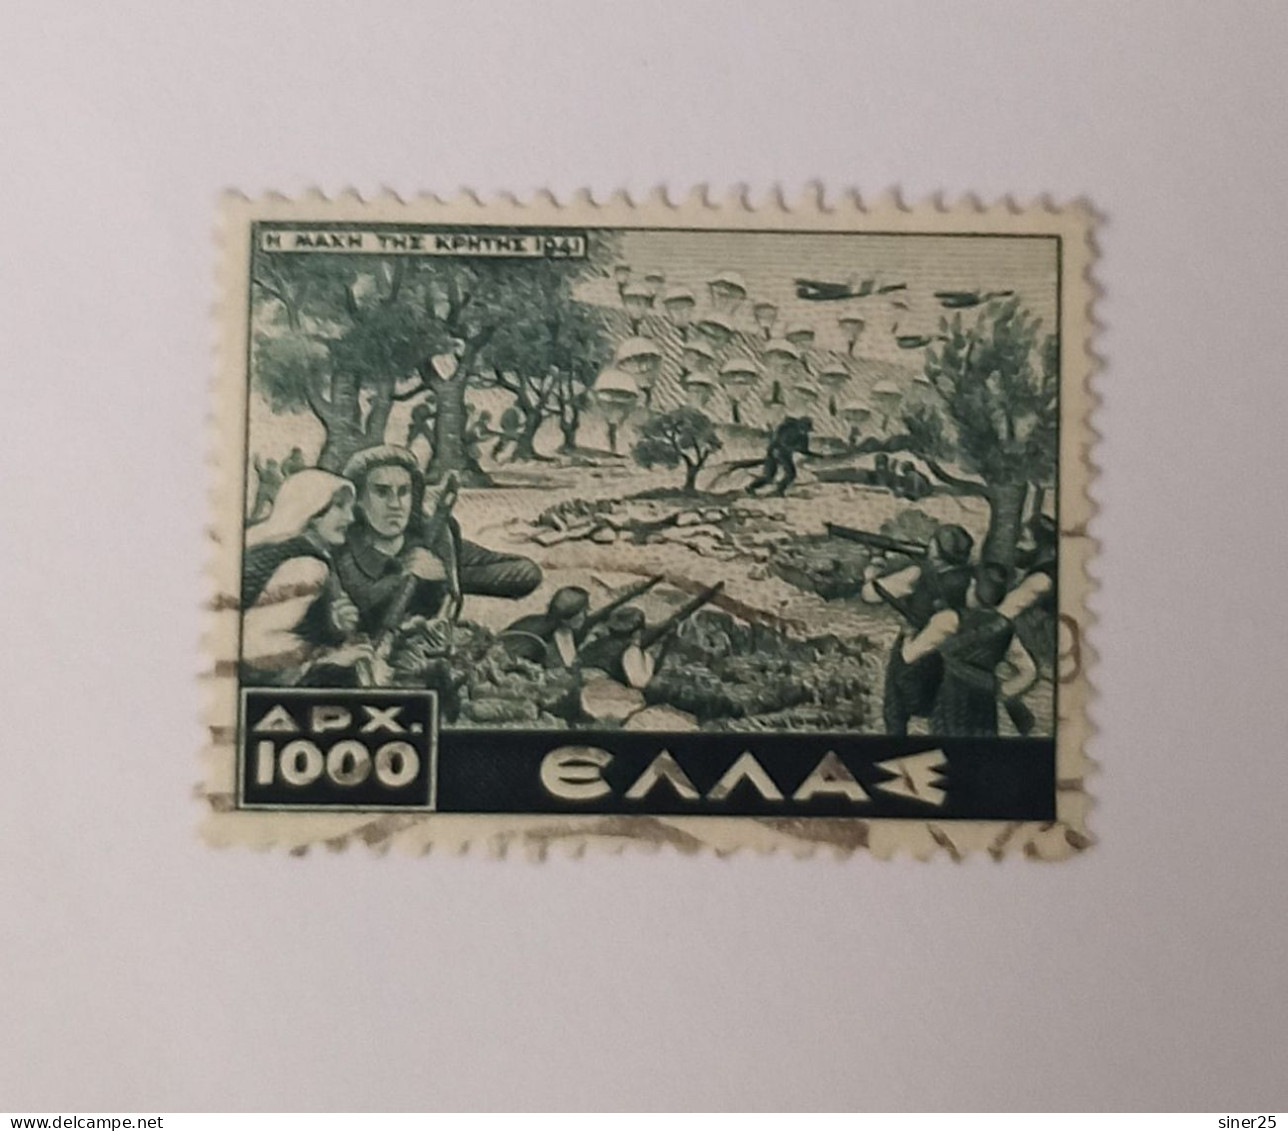 Greece 1948 - Used - Gebraucht